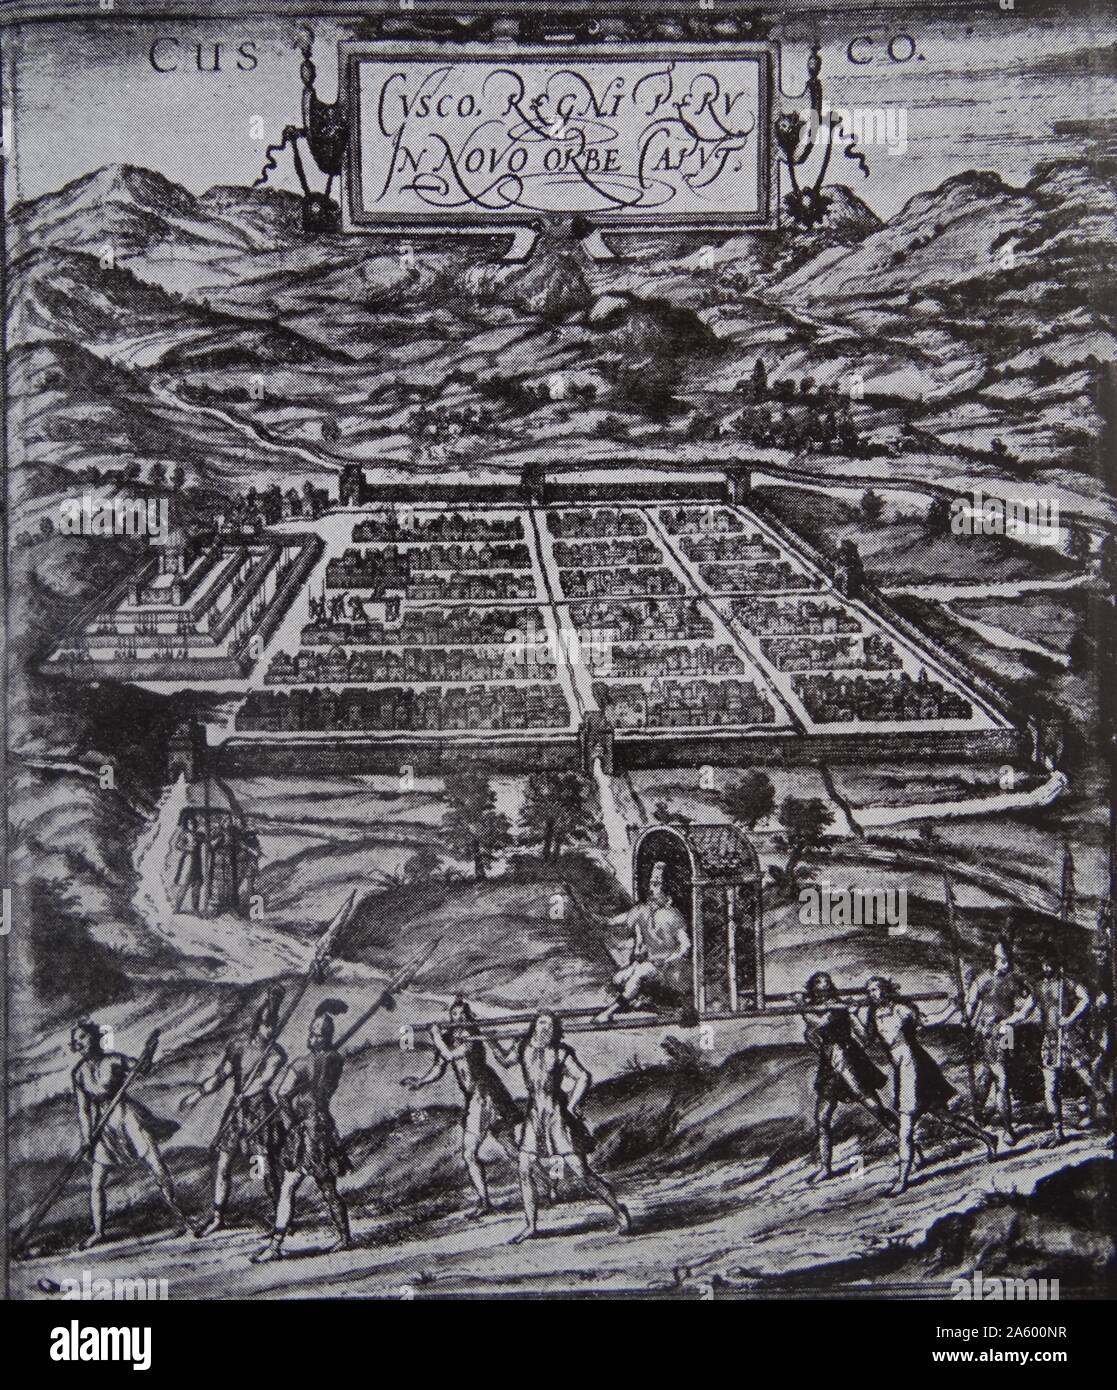 17th century illustration of Cusco (Cuzco) in Peru. Stock Photo